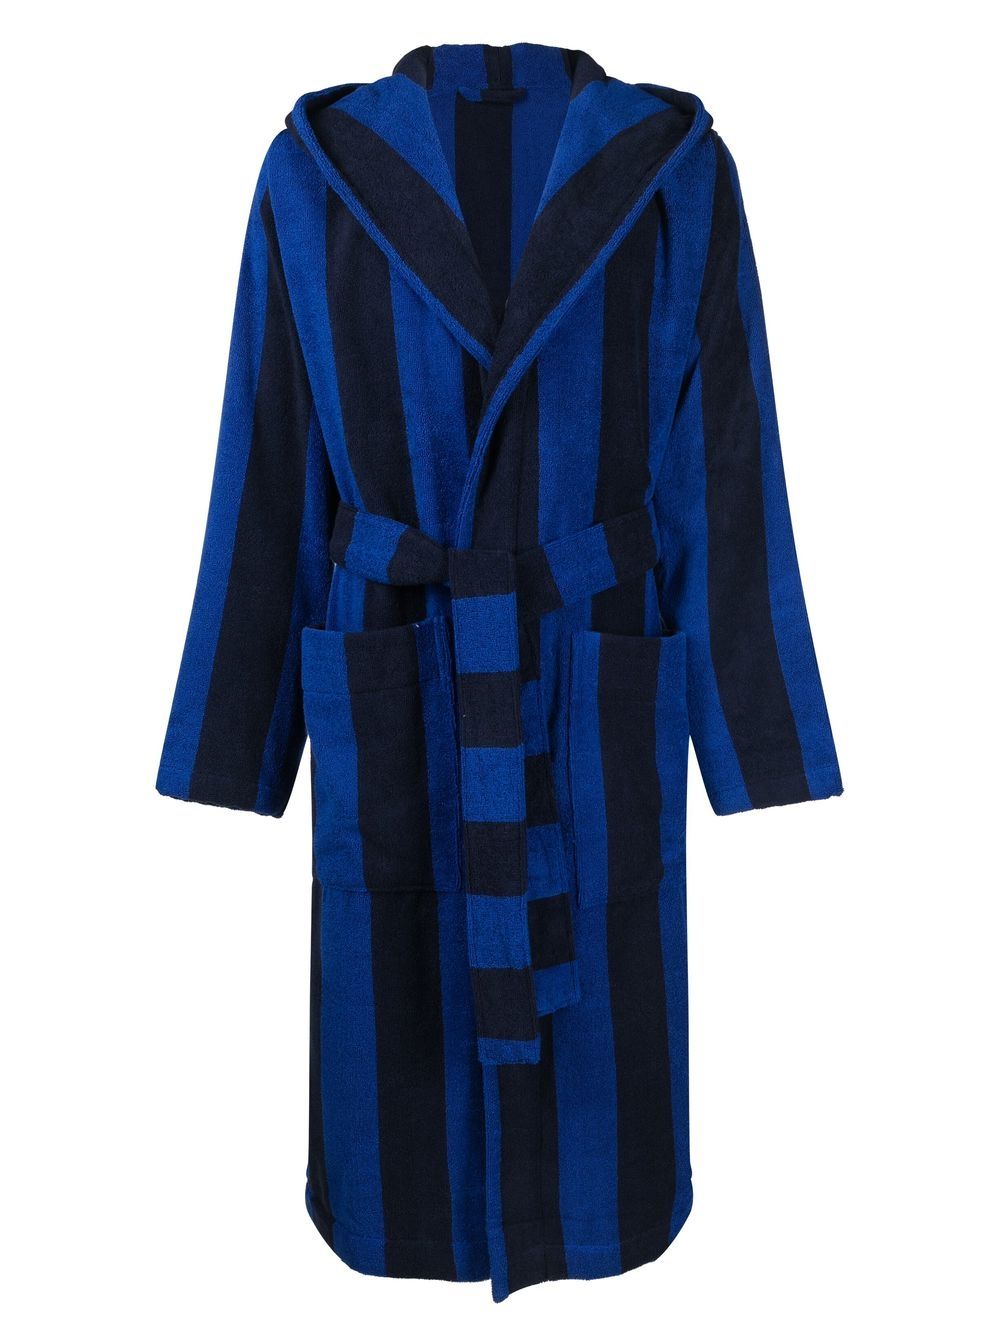 TEKLA hooded striped bathrobe